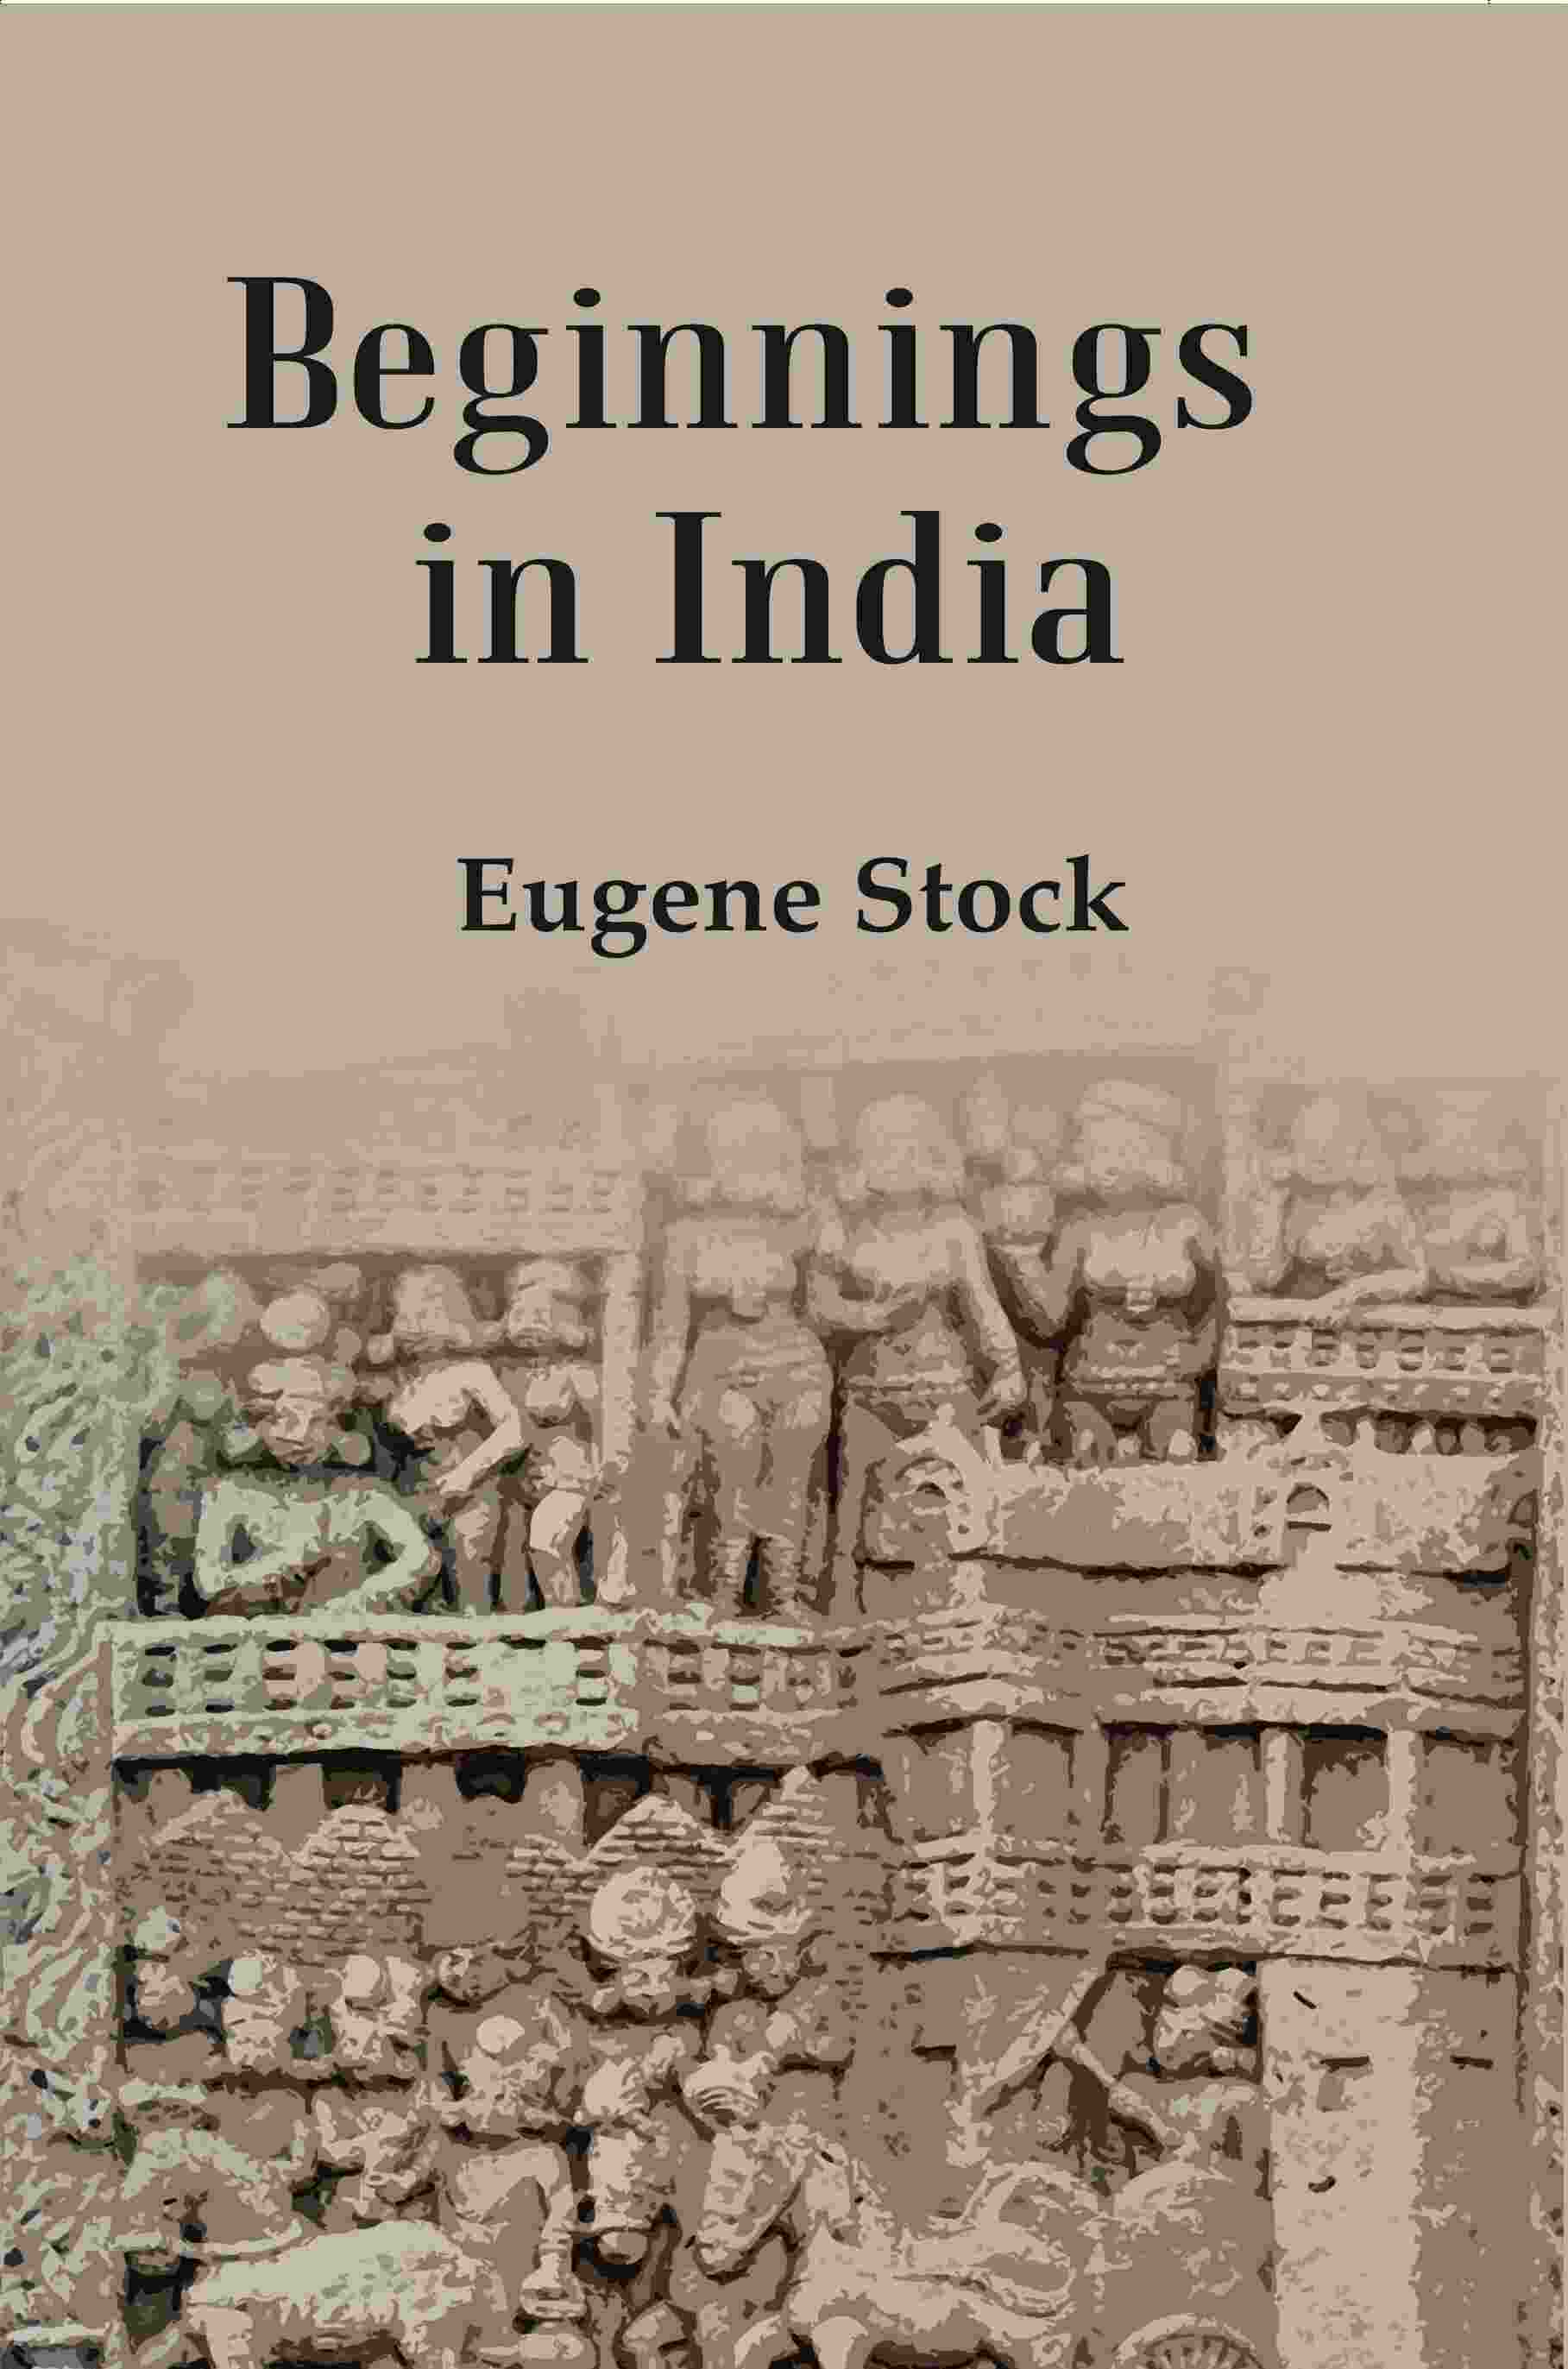 Beginnings in India